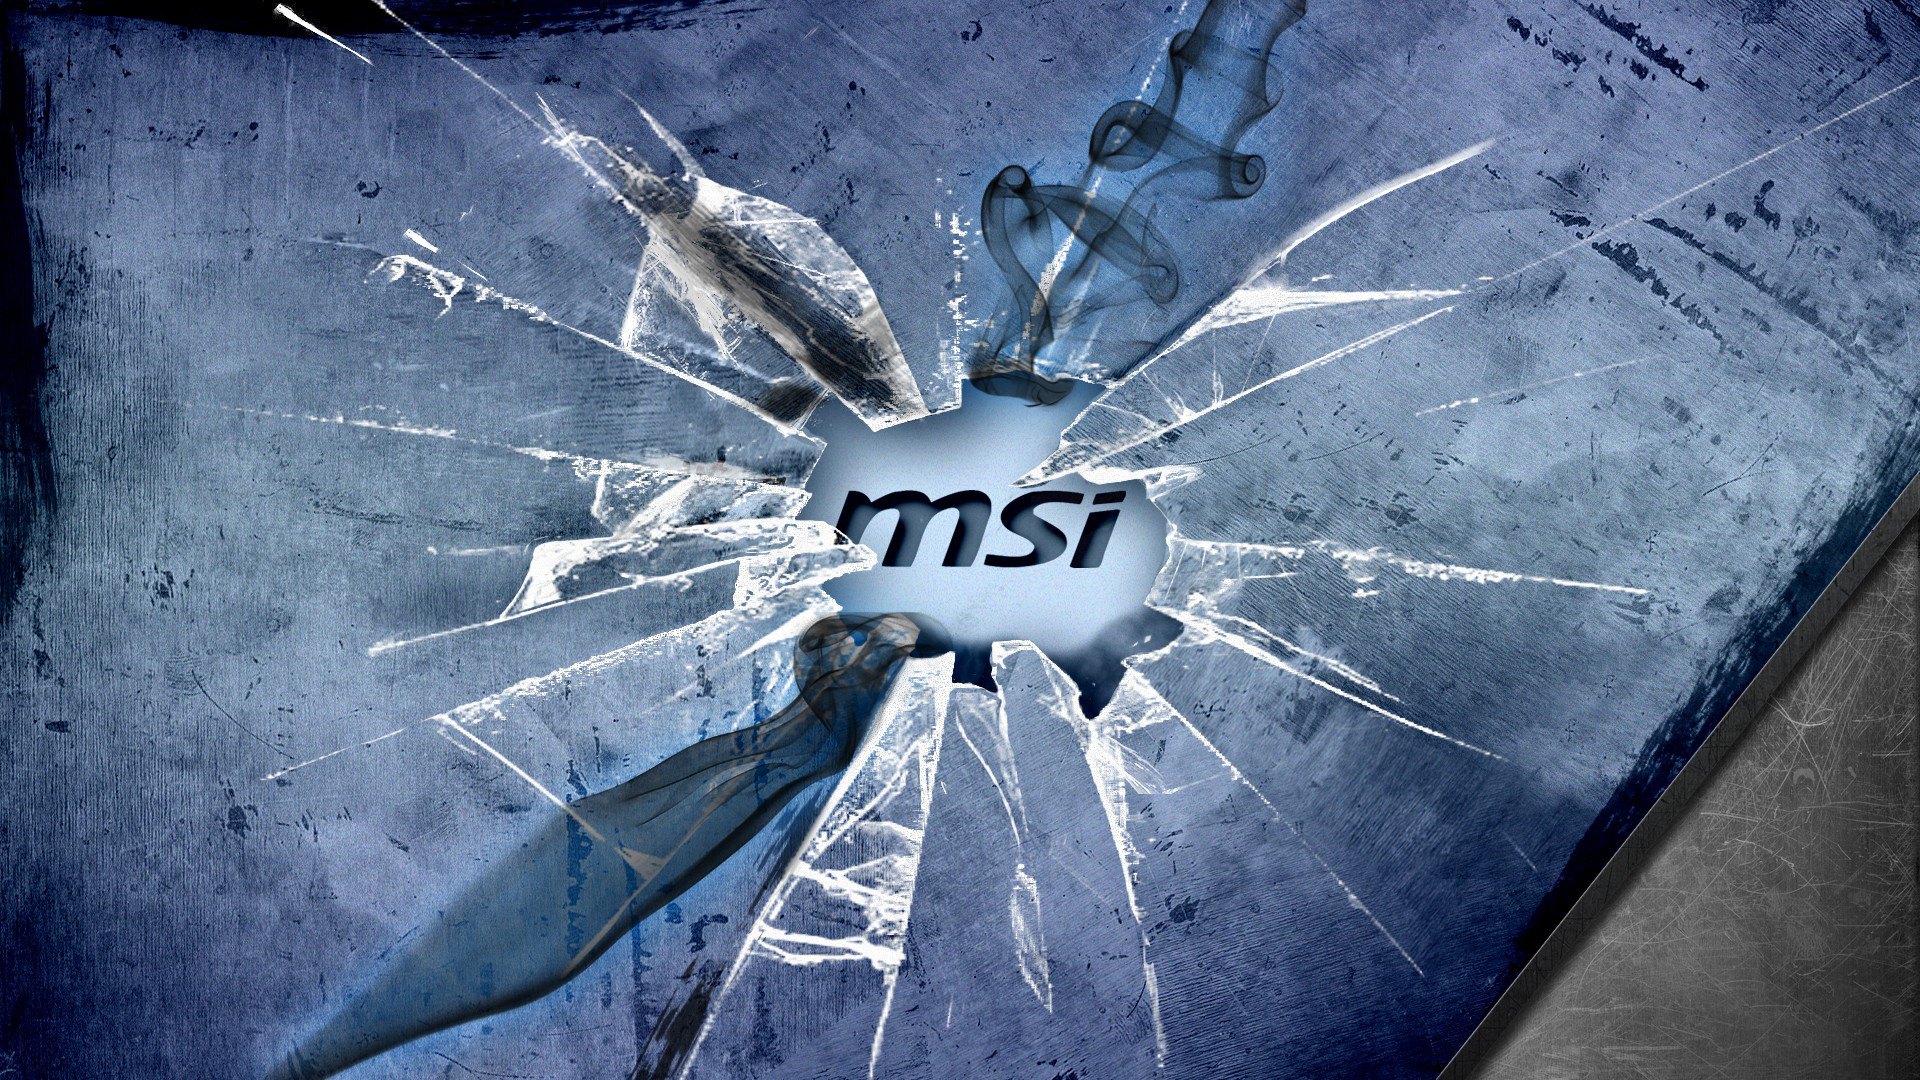 msi cool crack broken glass logo hd 1920x1080 1080p wallpaper